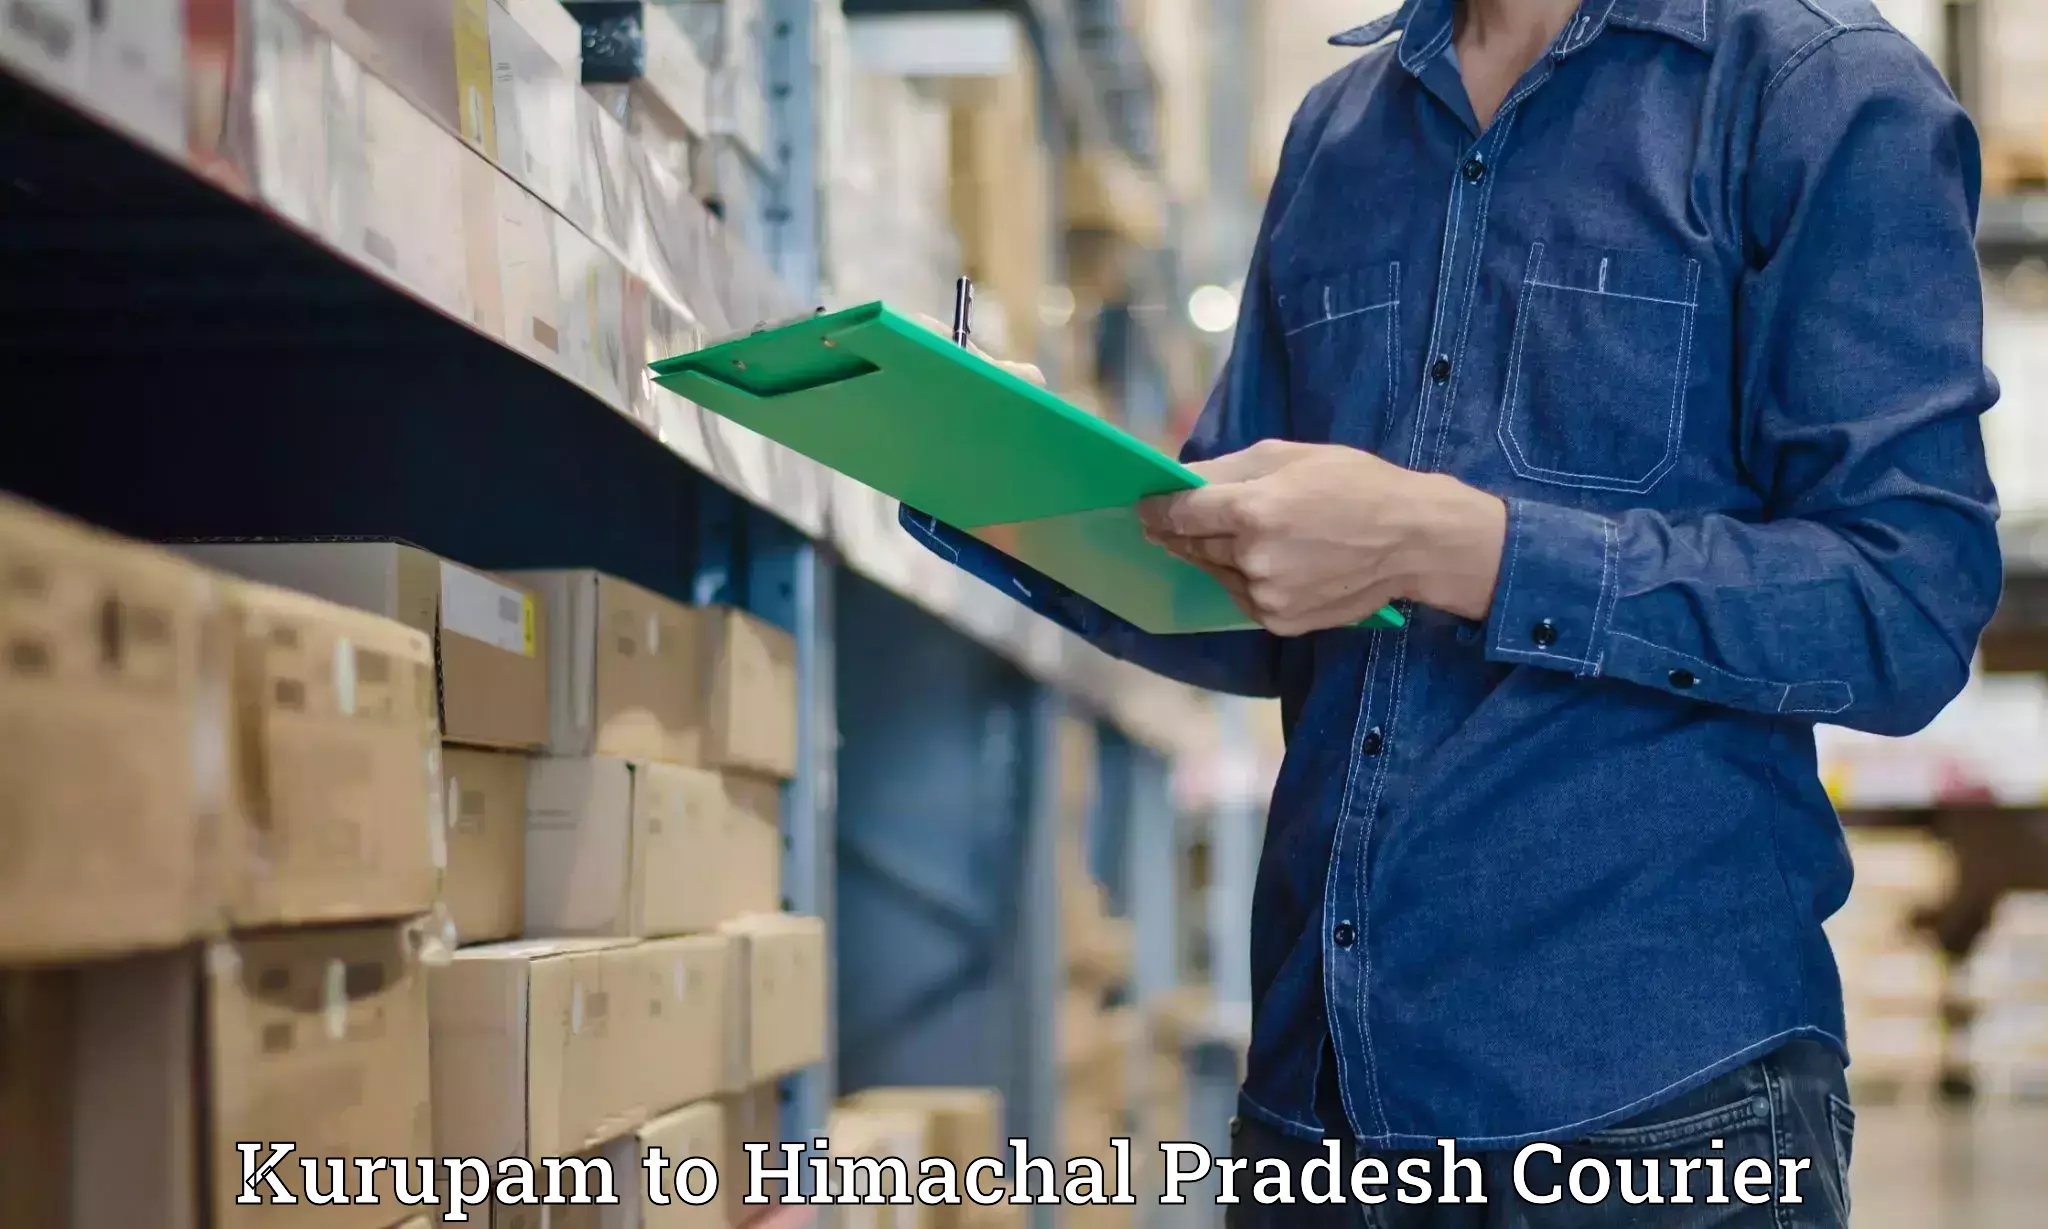 Efficient cargo handling Kurupam to Dheera